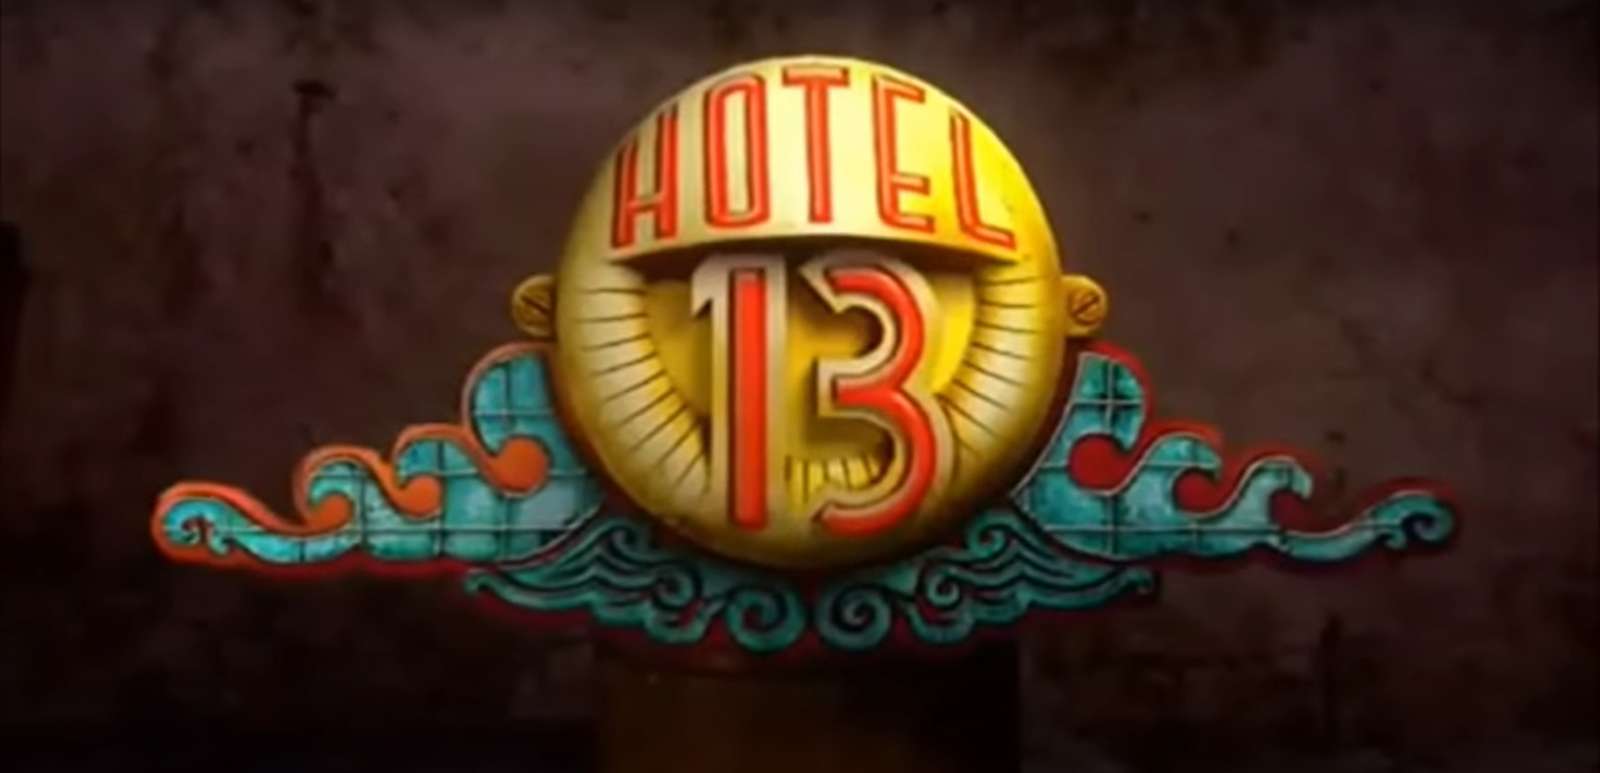 Hotel 13-logo legpuzzel online